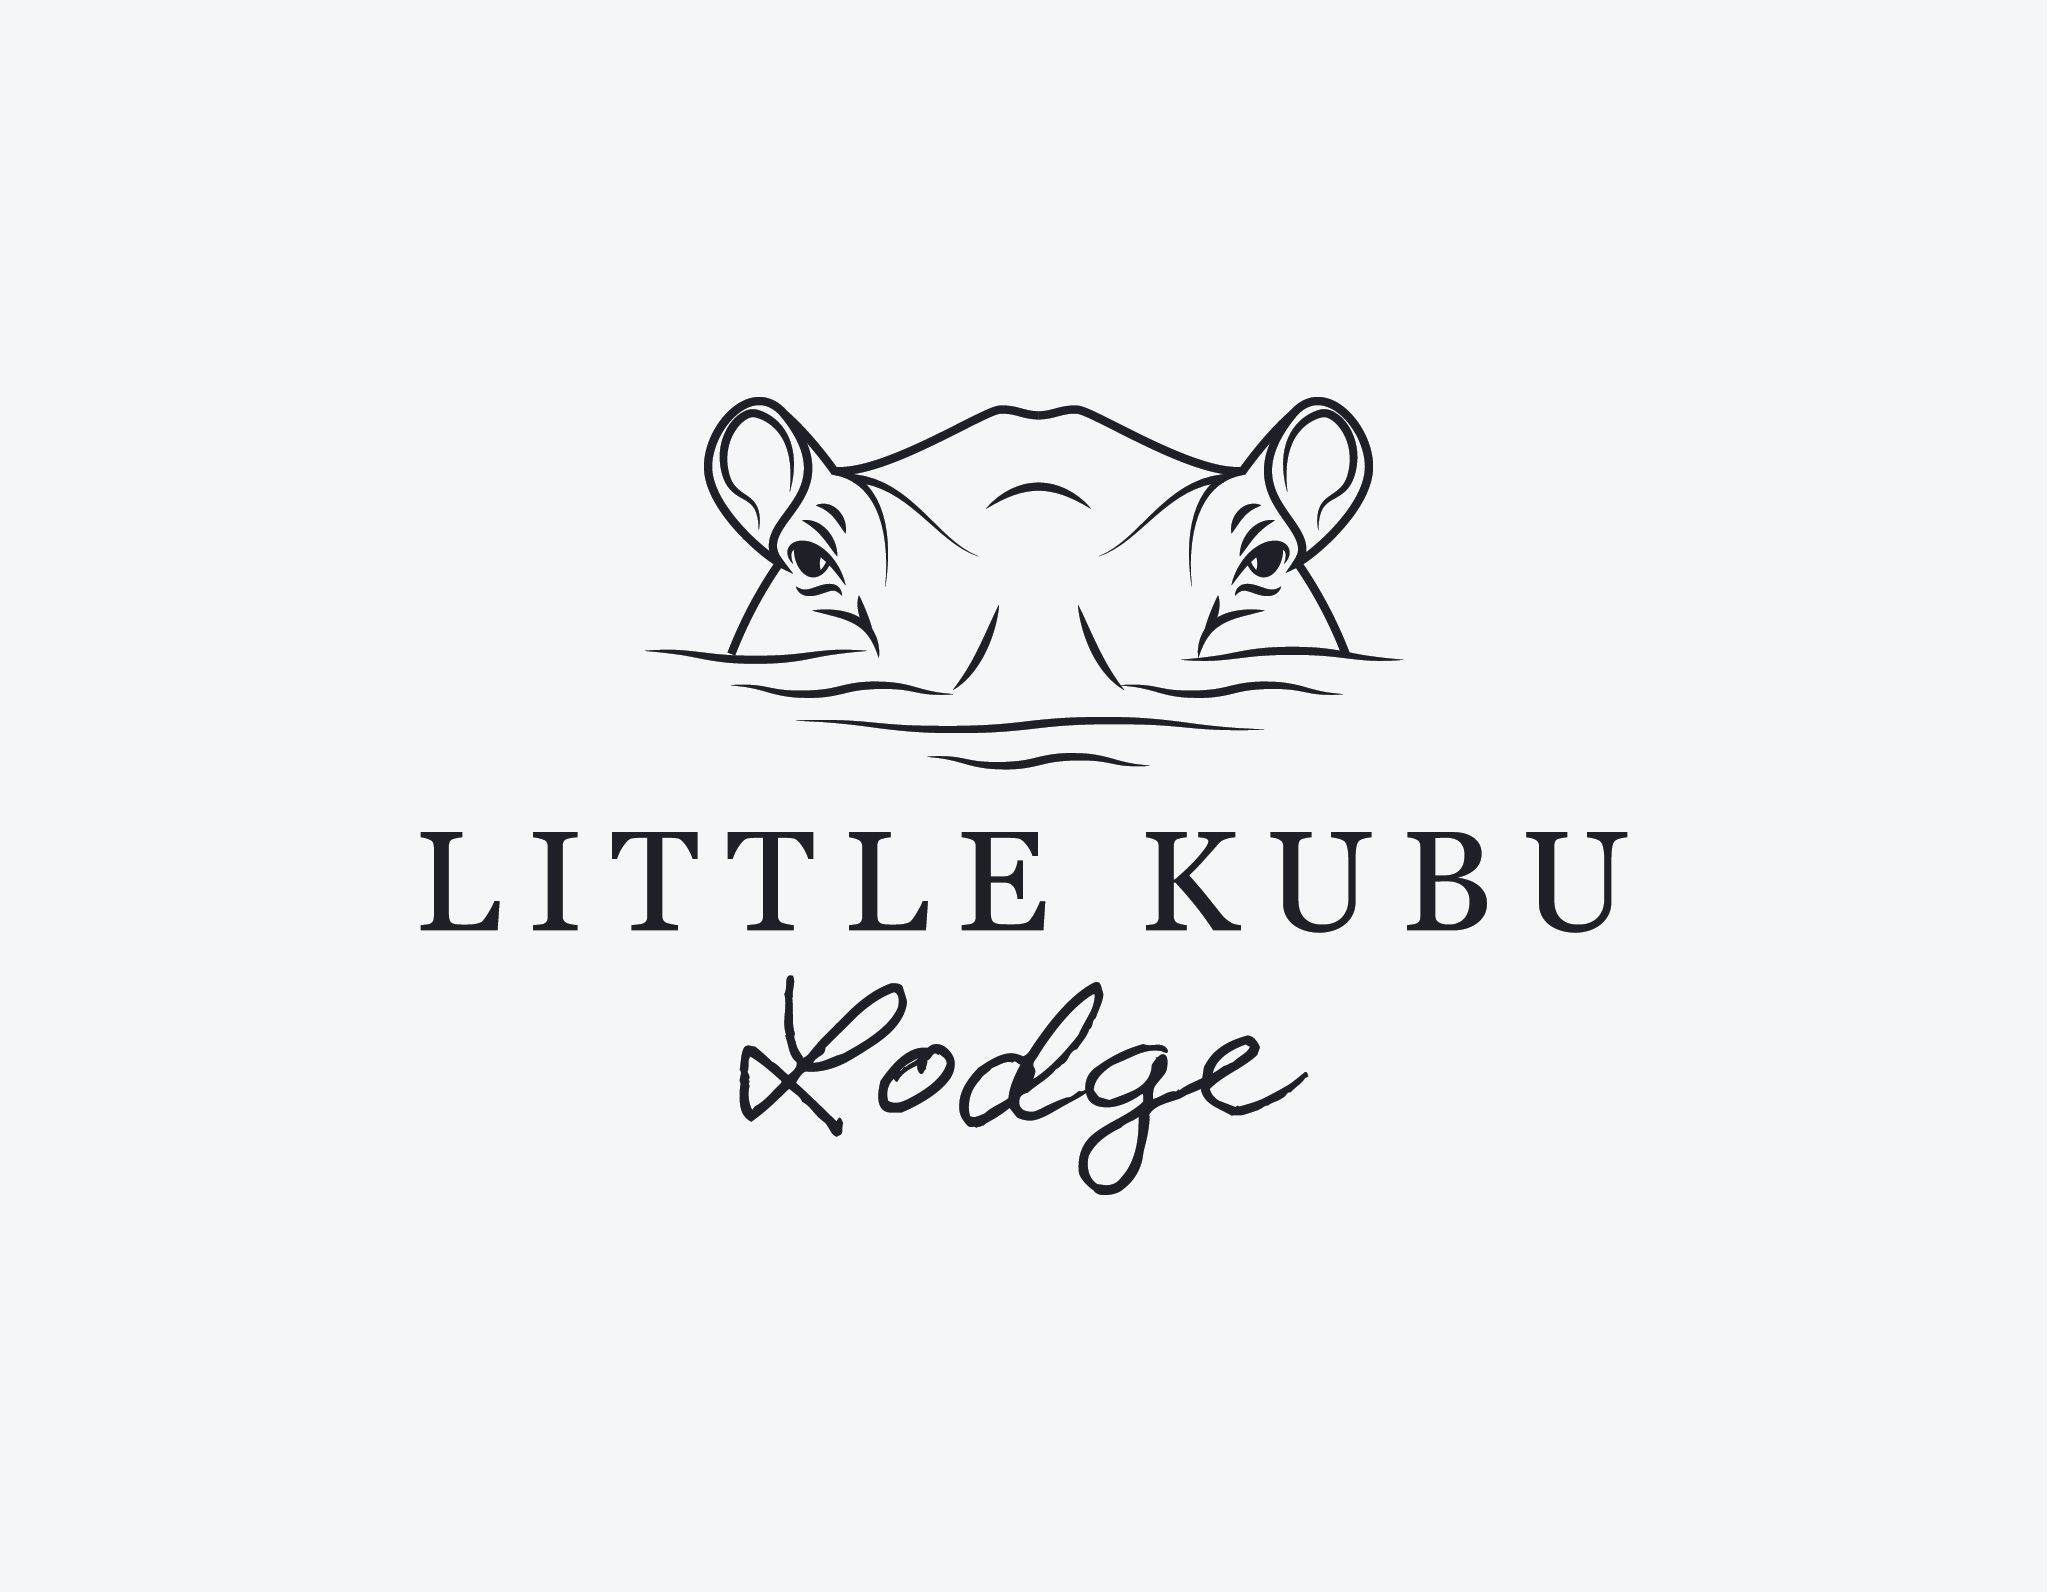 Little Kubu Lodge logo design